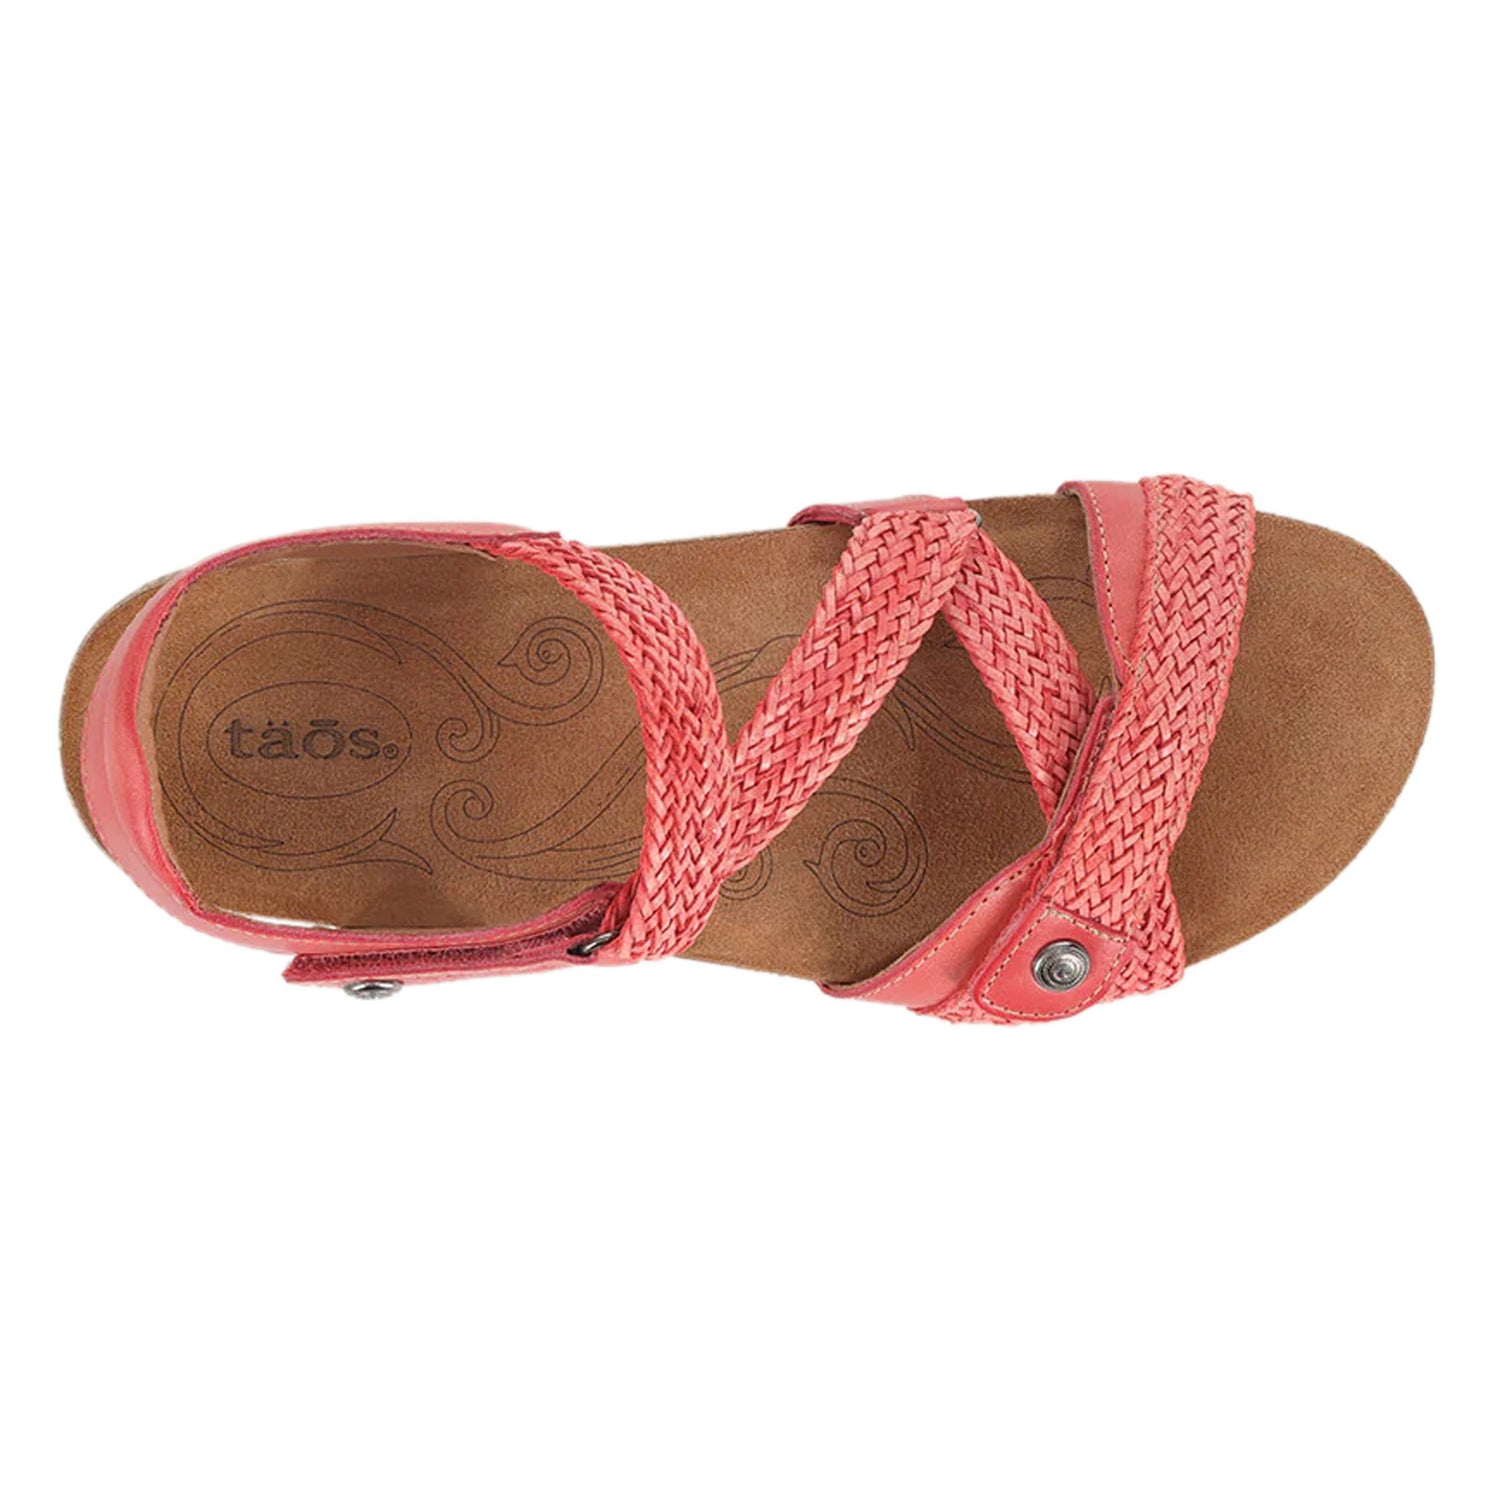 Peltz Shoes  Women's Taos Trulie Sandal Coral TRU-16406-CRL